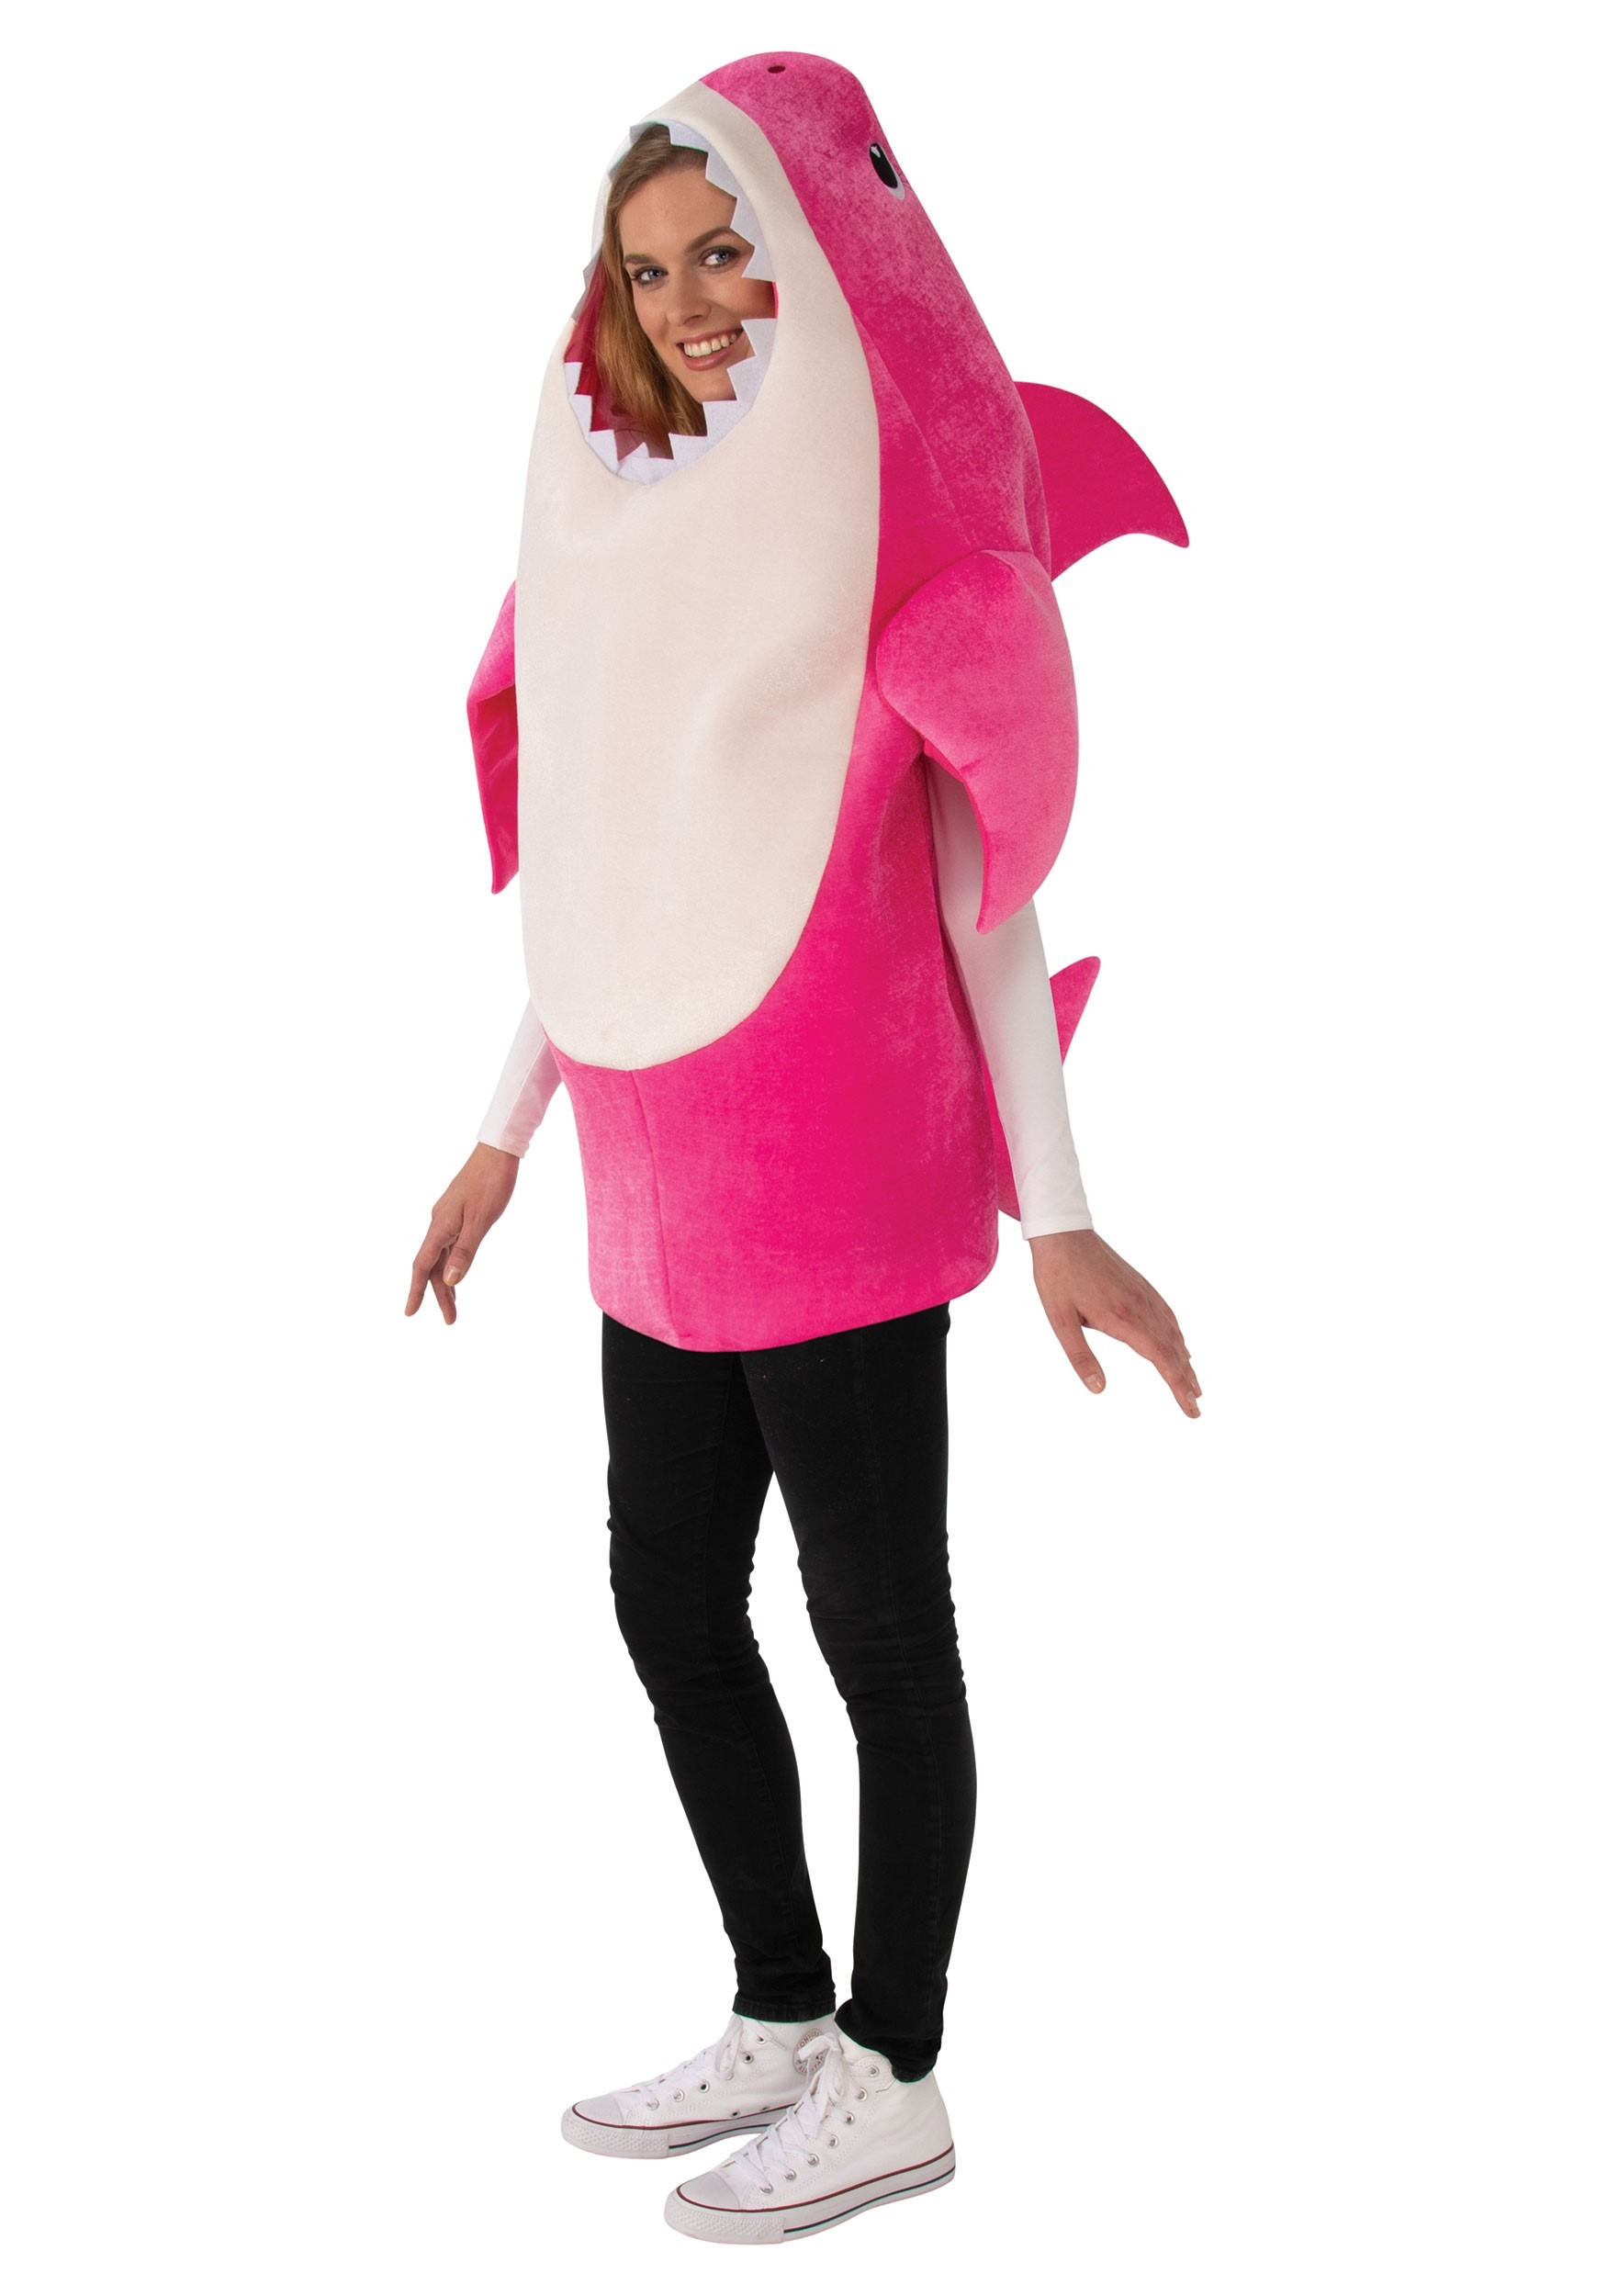 Baby Shark - Shark Costume 